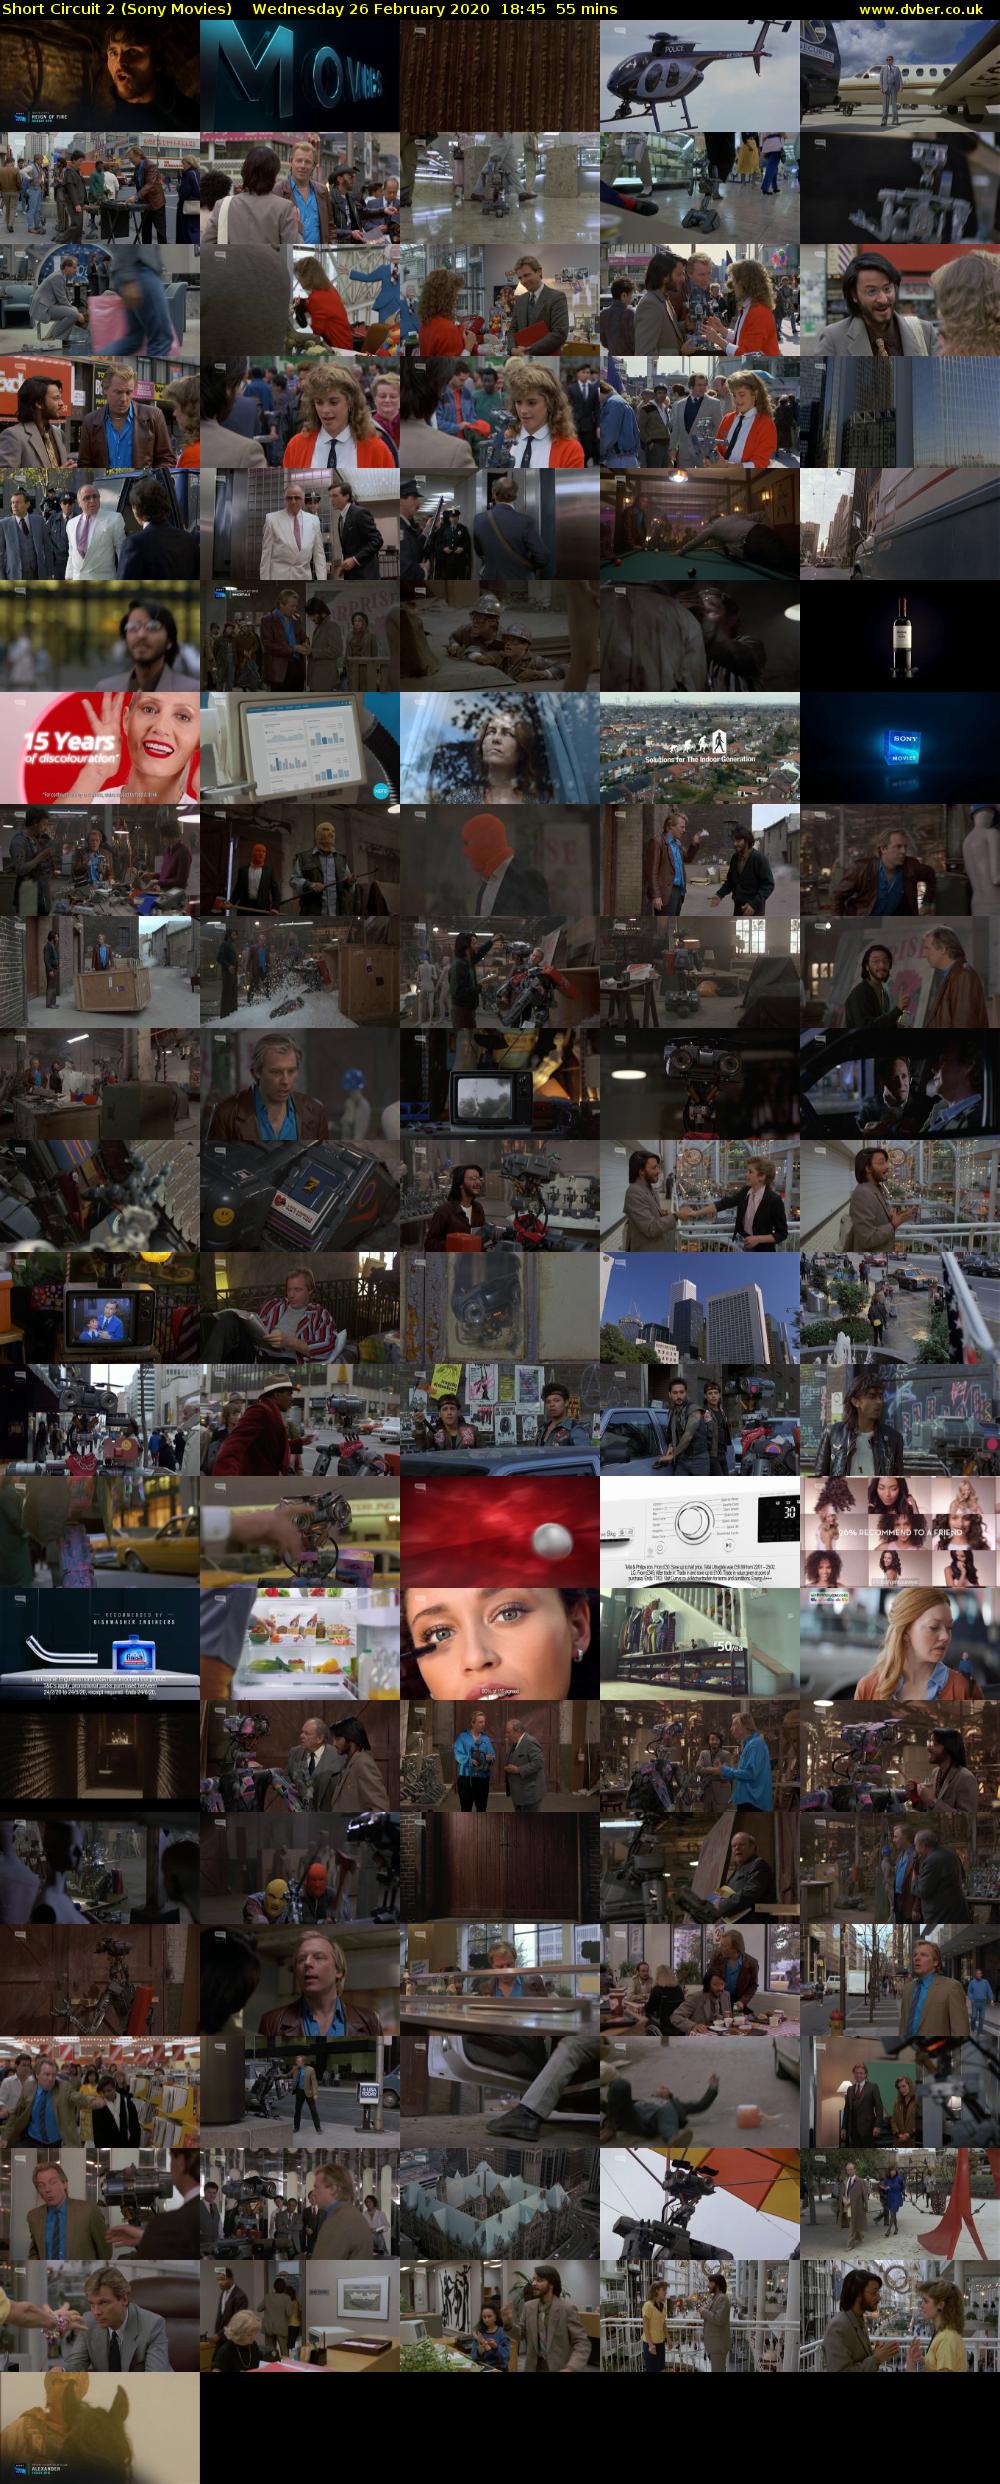 Short Circuit 2 (Sony Movies) Wednesday 26 February 2020 18:45 - 19:40